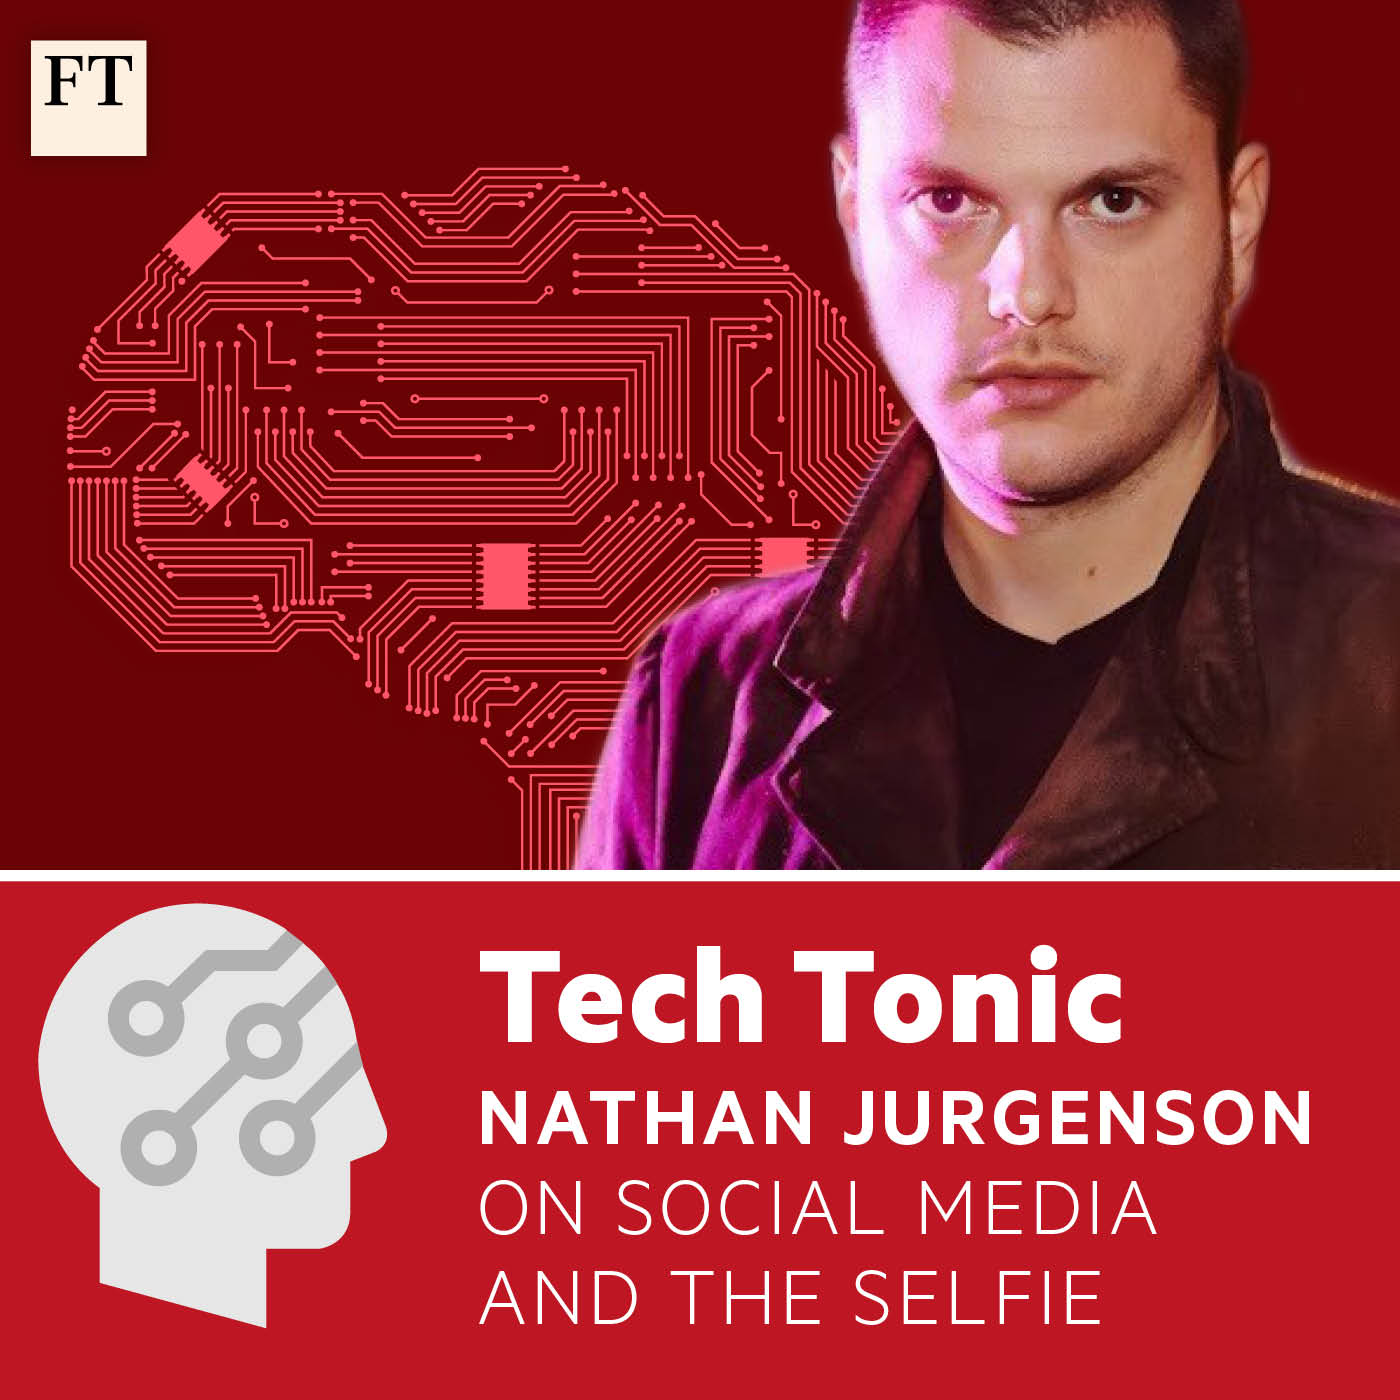 Nathan Jurgenson on social media and the selfie